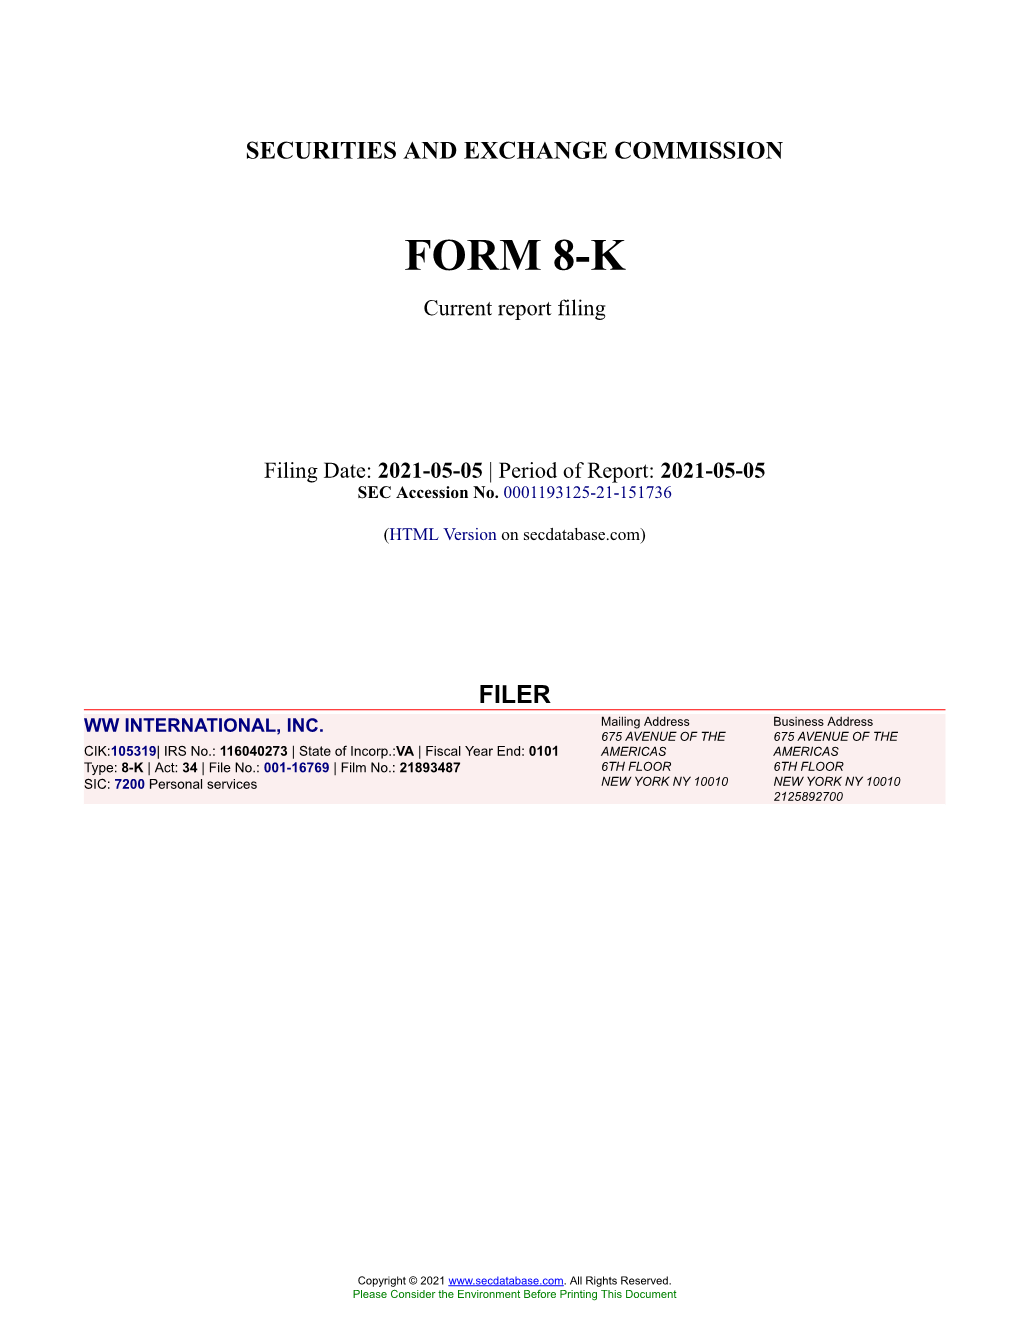 WW INTERNATIONAL, INC. Form 8-K Current Event Report Filed 2021-05